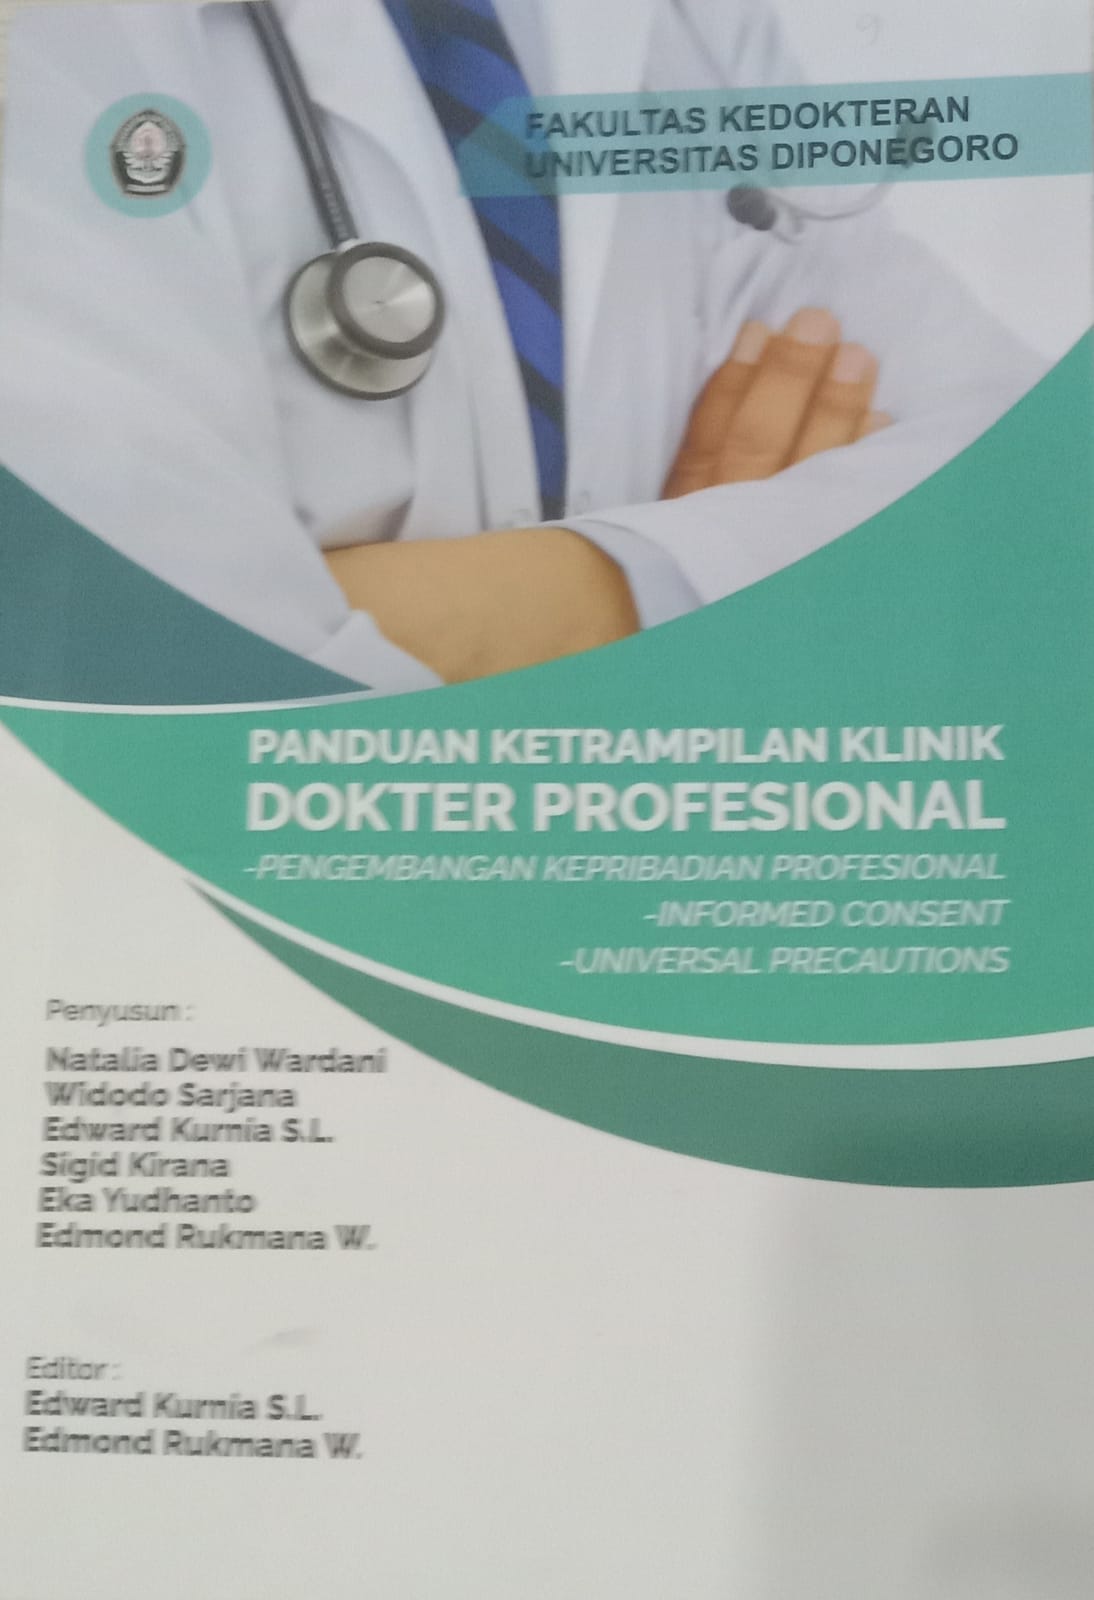 Panduan Ketrampilan Klinik Dokter Profesional: Pengembangan Kepribadian Profesional - Informed Consent - Universal Precautions